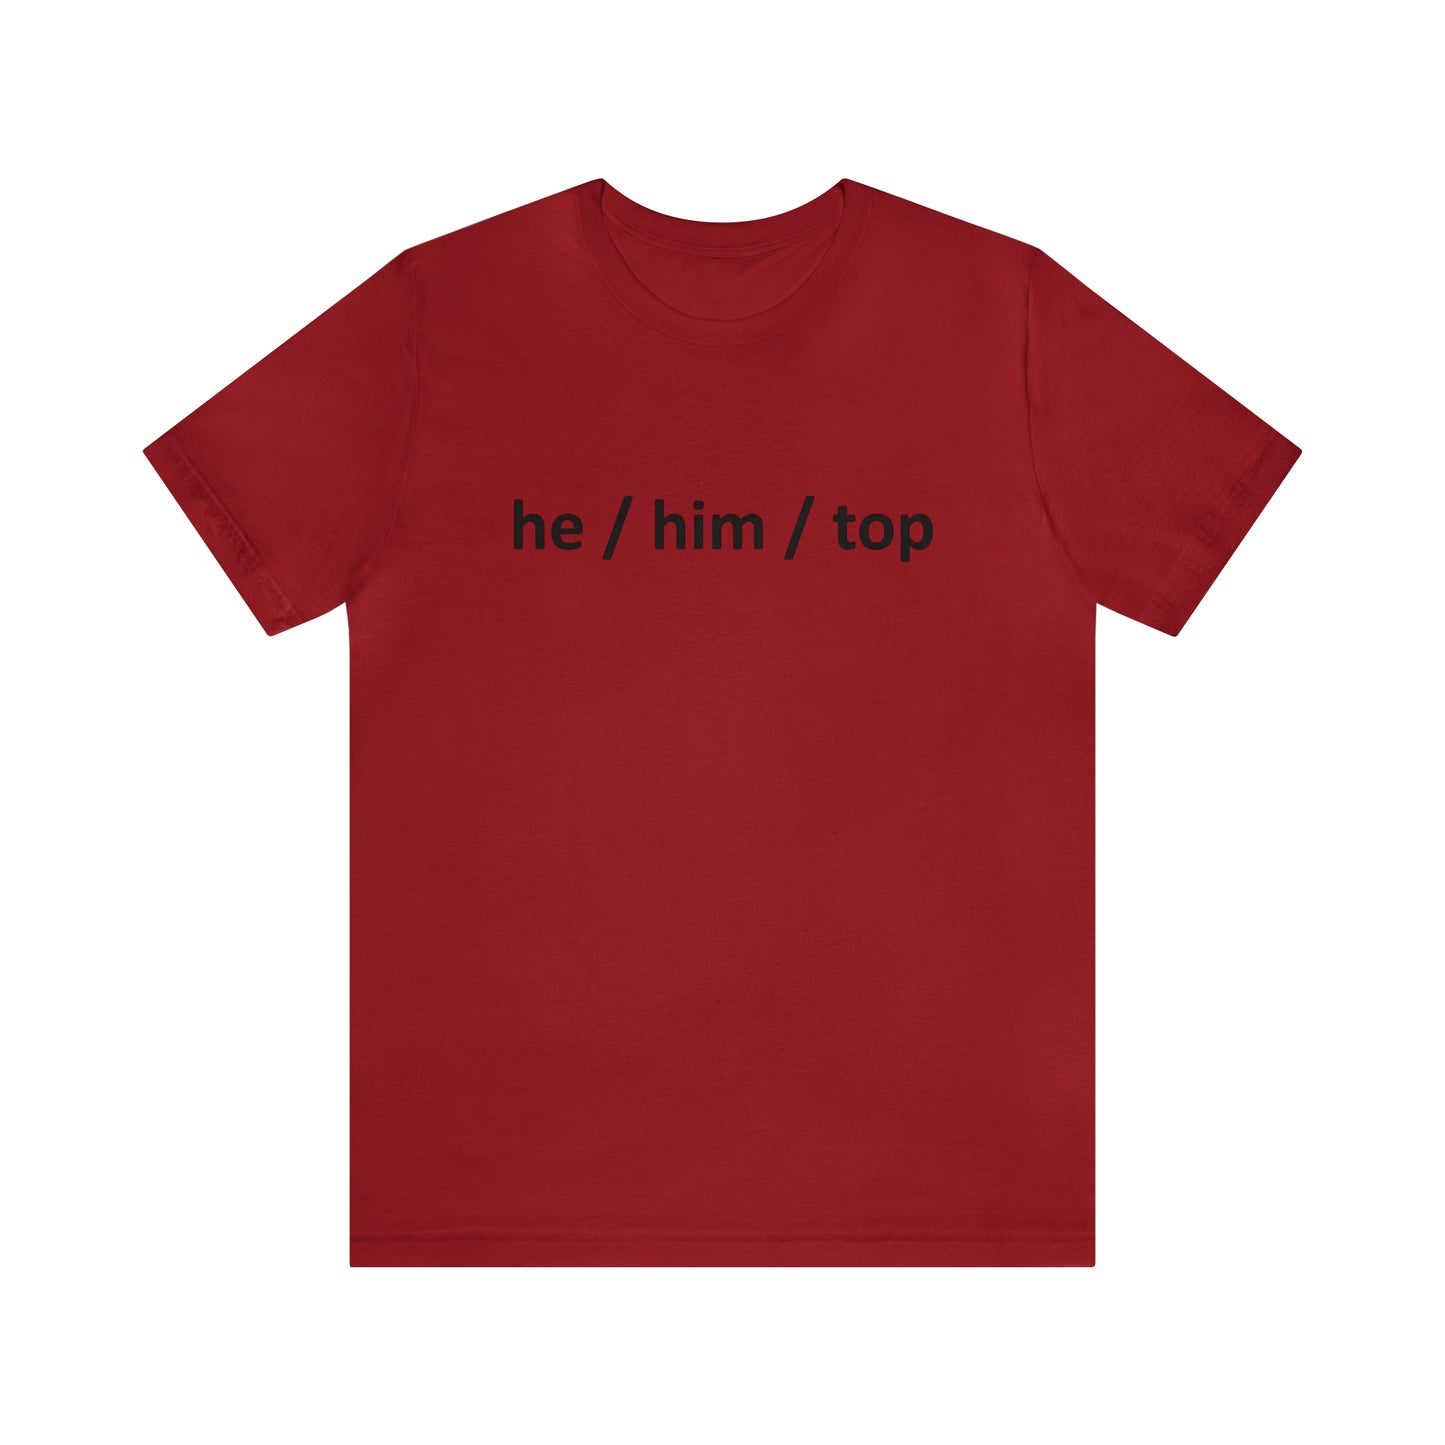 he / him / top Pronoun Short Sleeve T-Shirt